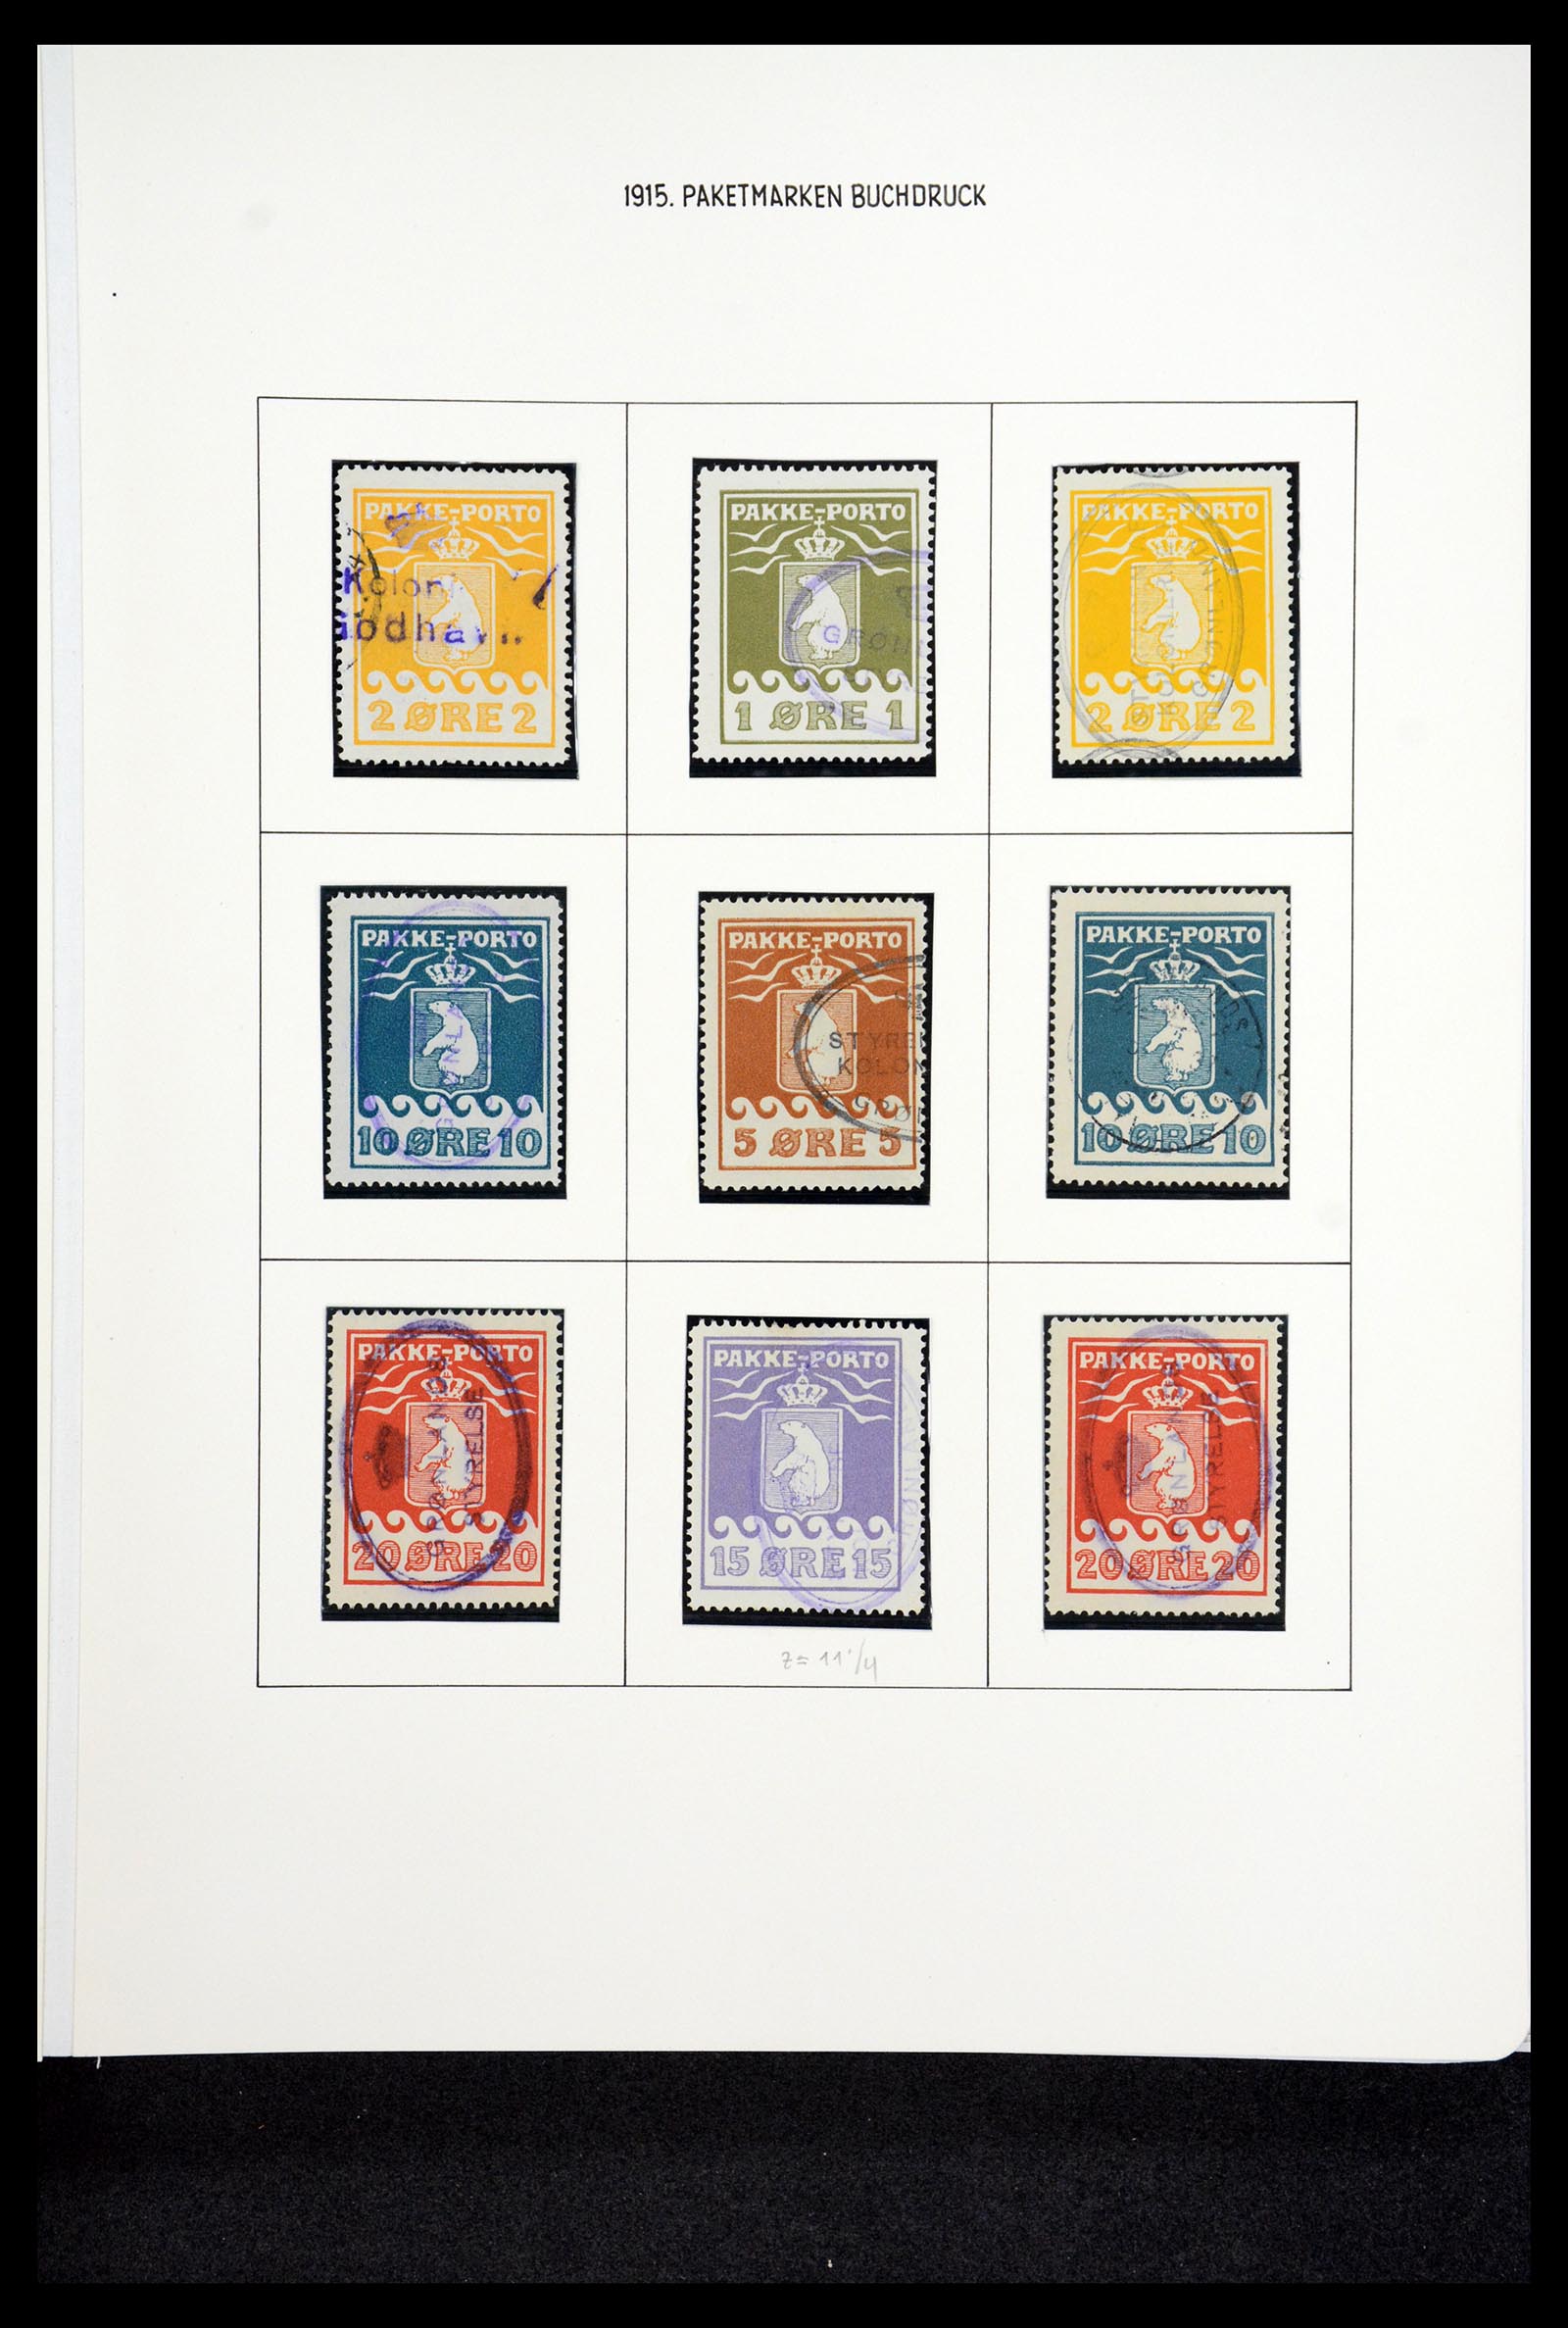 36748 003 - Stamp collection 36748 Greenland pakke-porto 1905-1930.